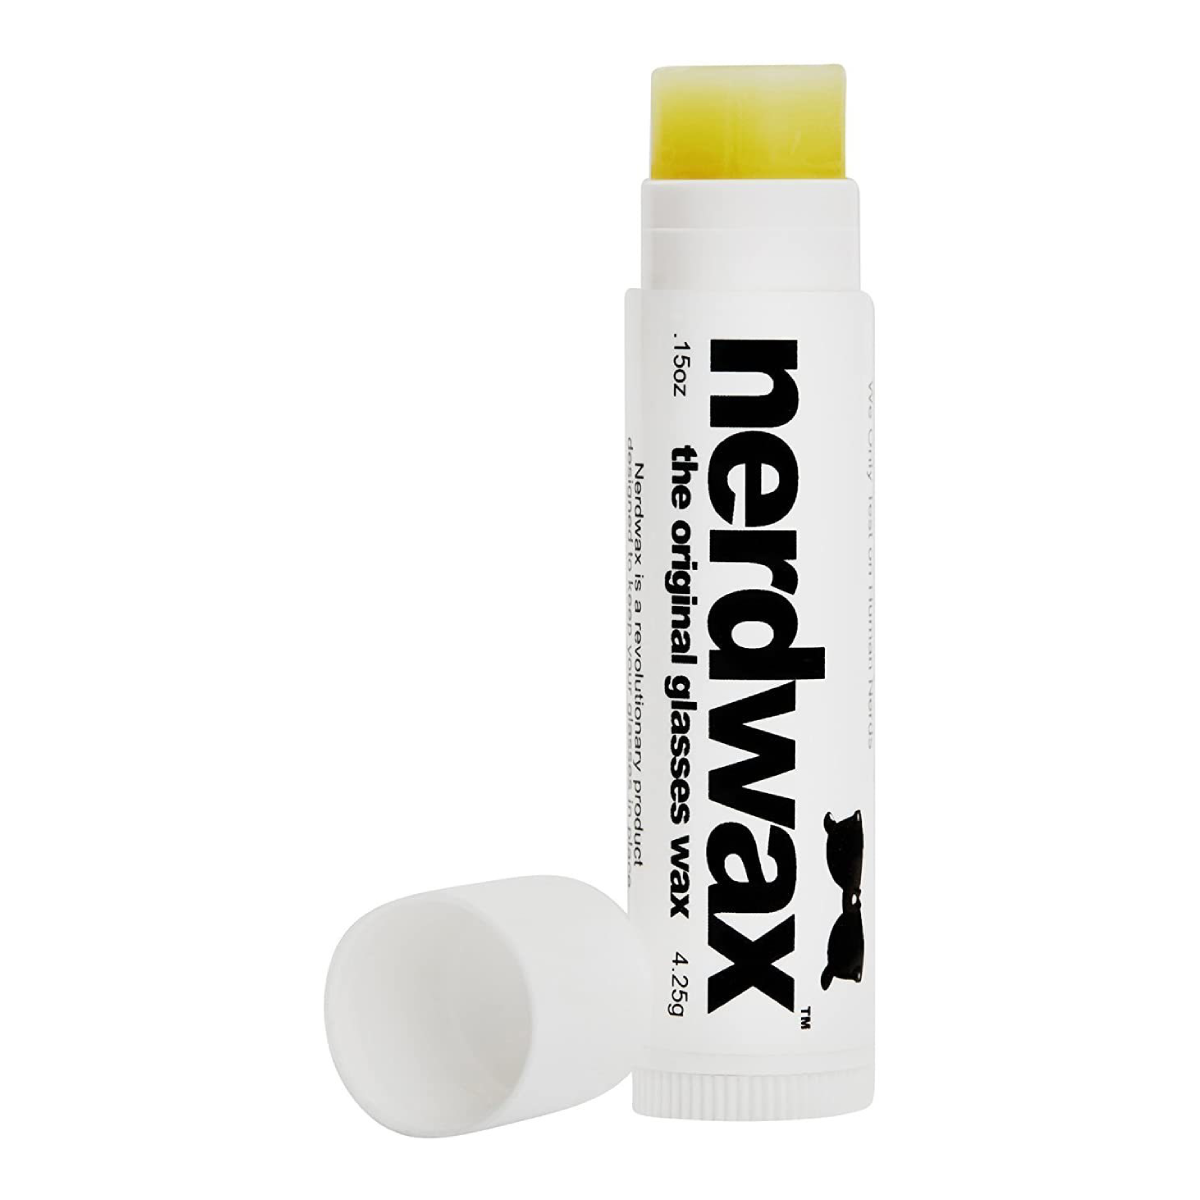 Nerdwax the Original Glasses Wax reviews in Misc - ChickAdvisor